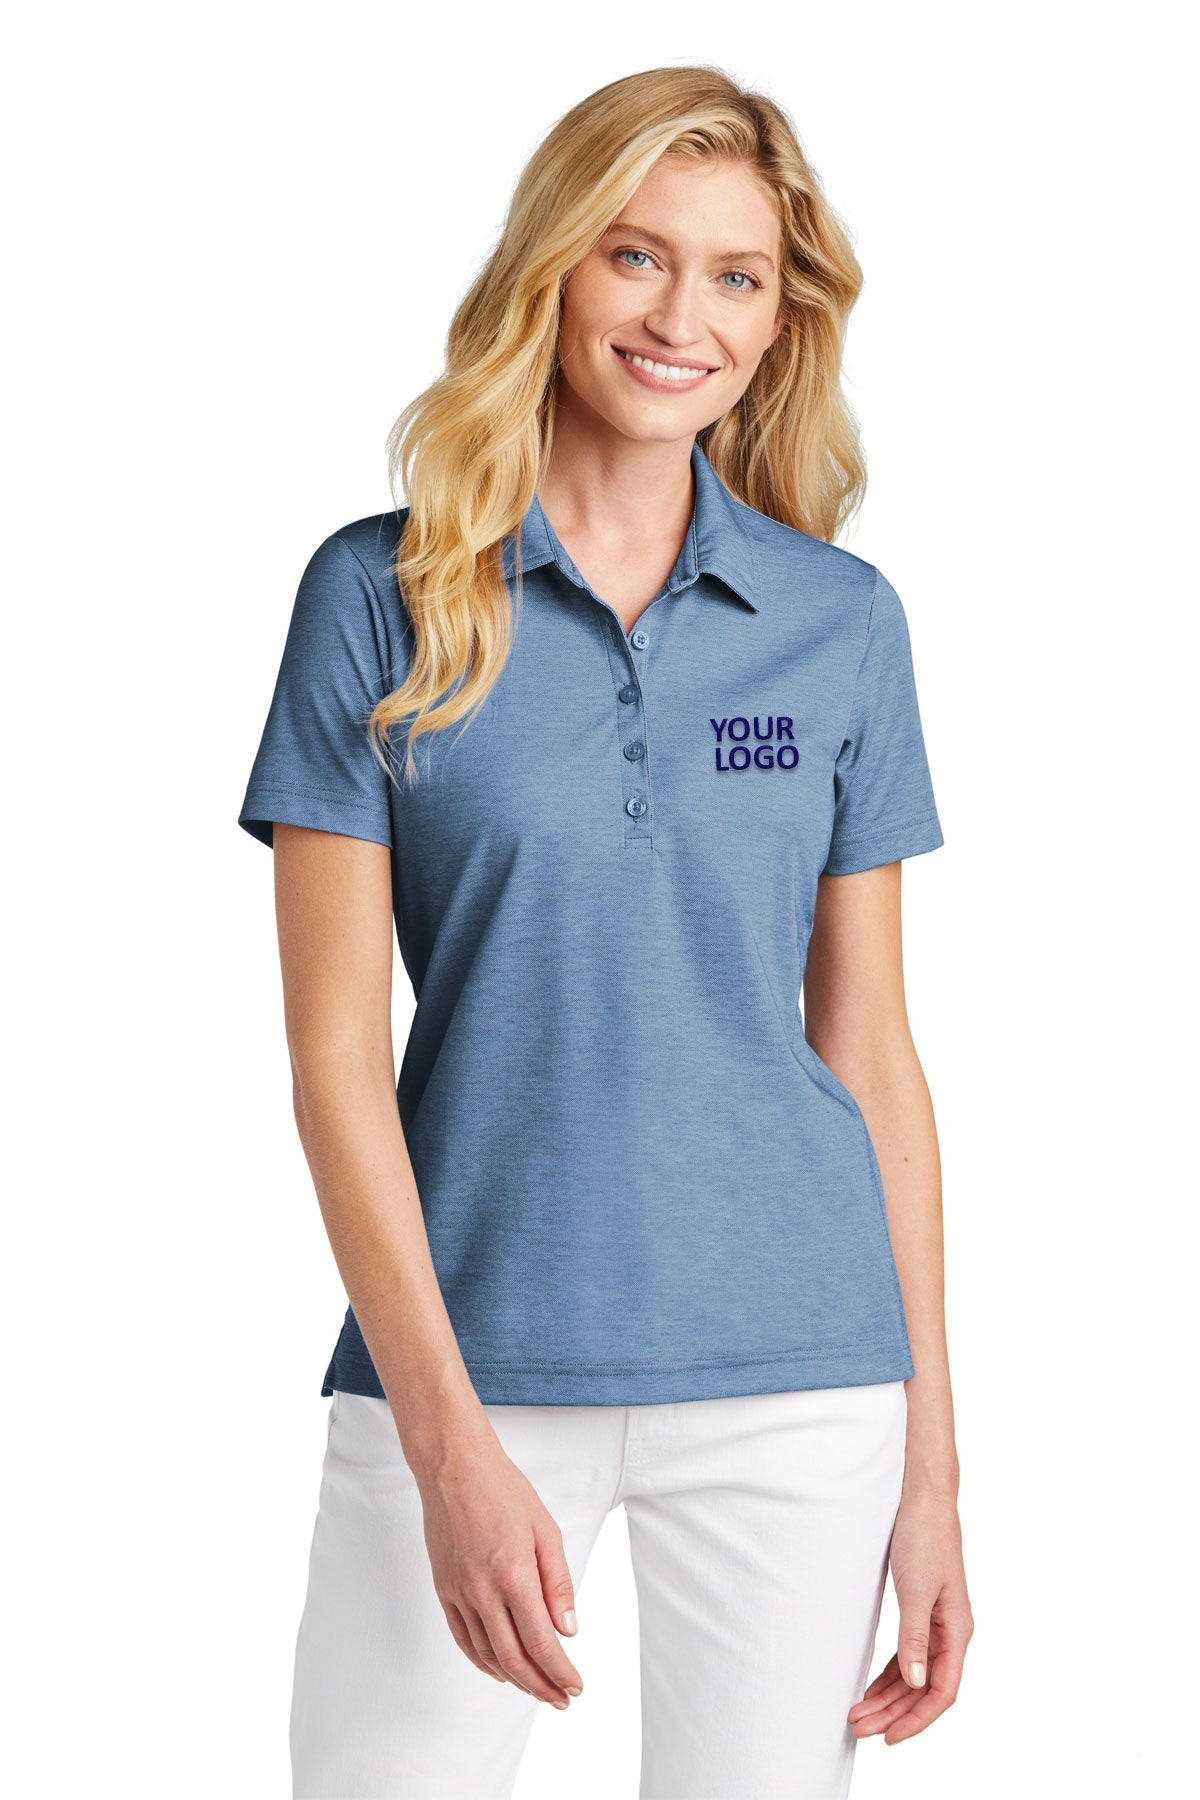 TravisMathew Classic Blue Heather Polos custom logo polo shirts embroidered